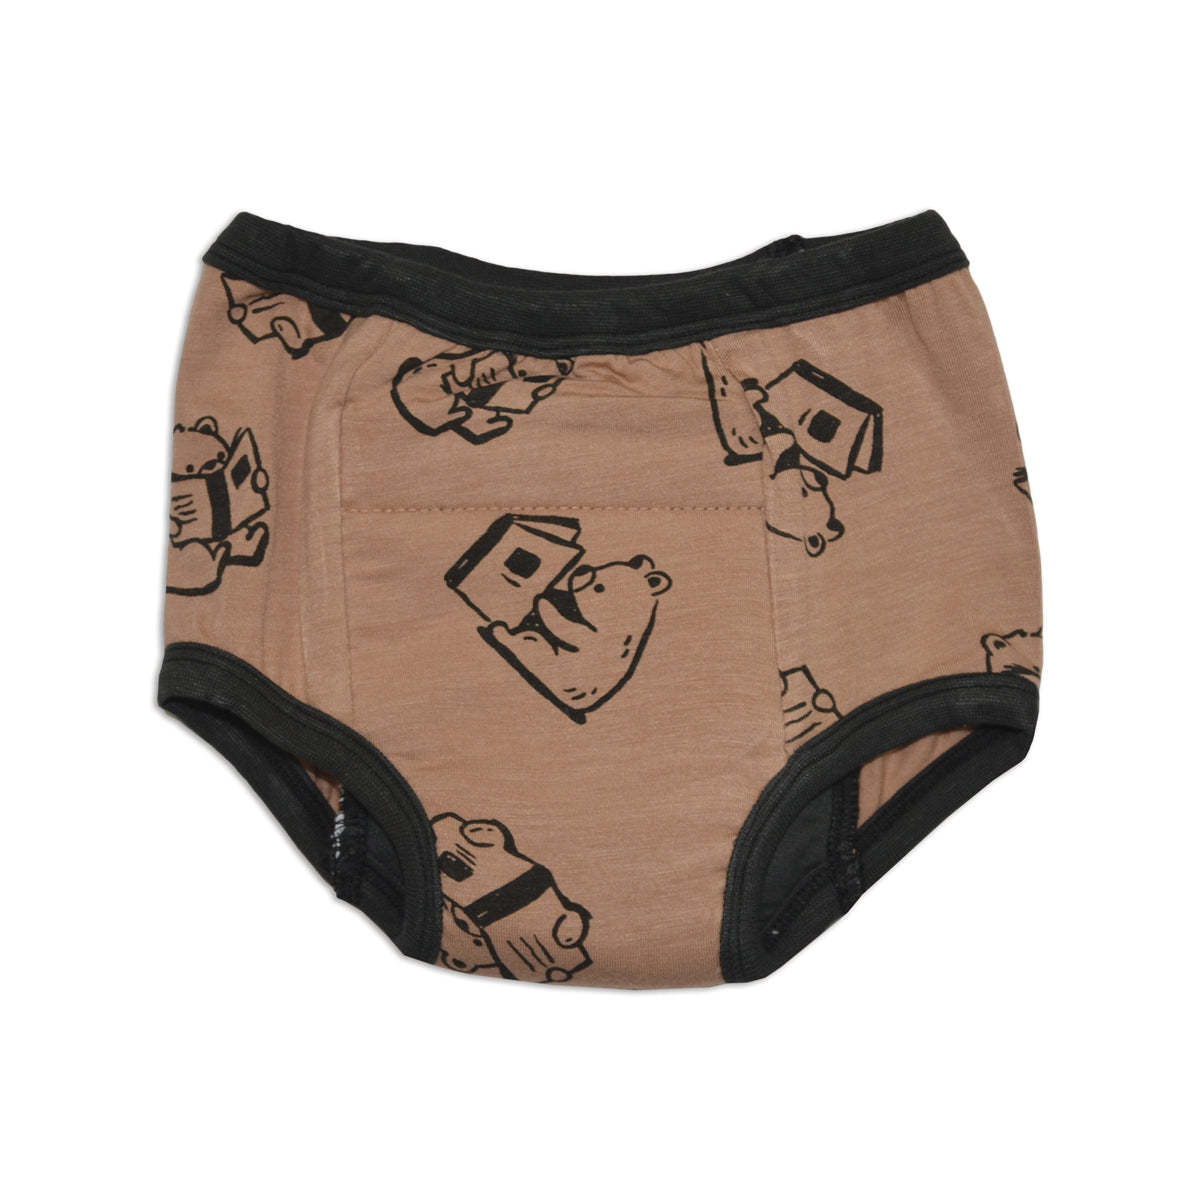 BIG ELEPHANT Baby Girls' Padded Potty Training Pants Underwear